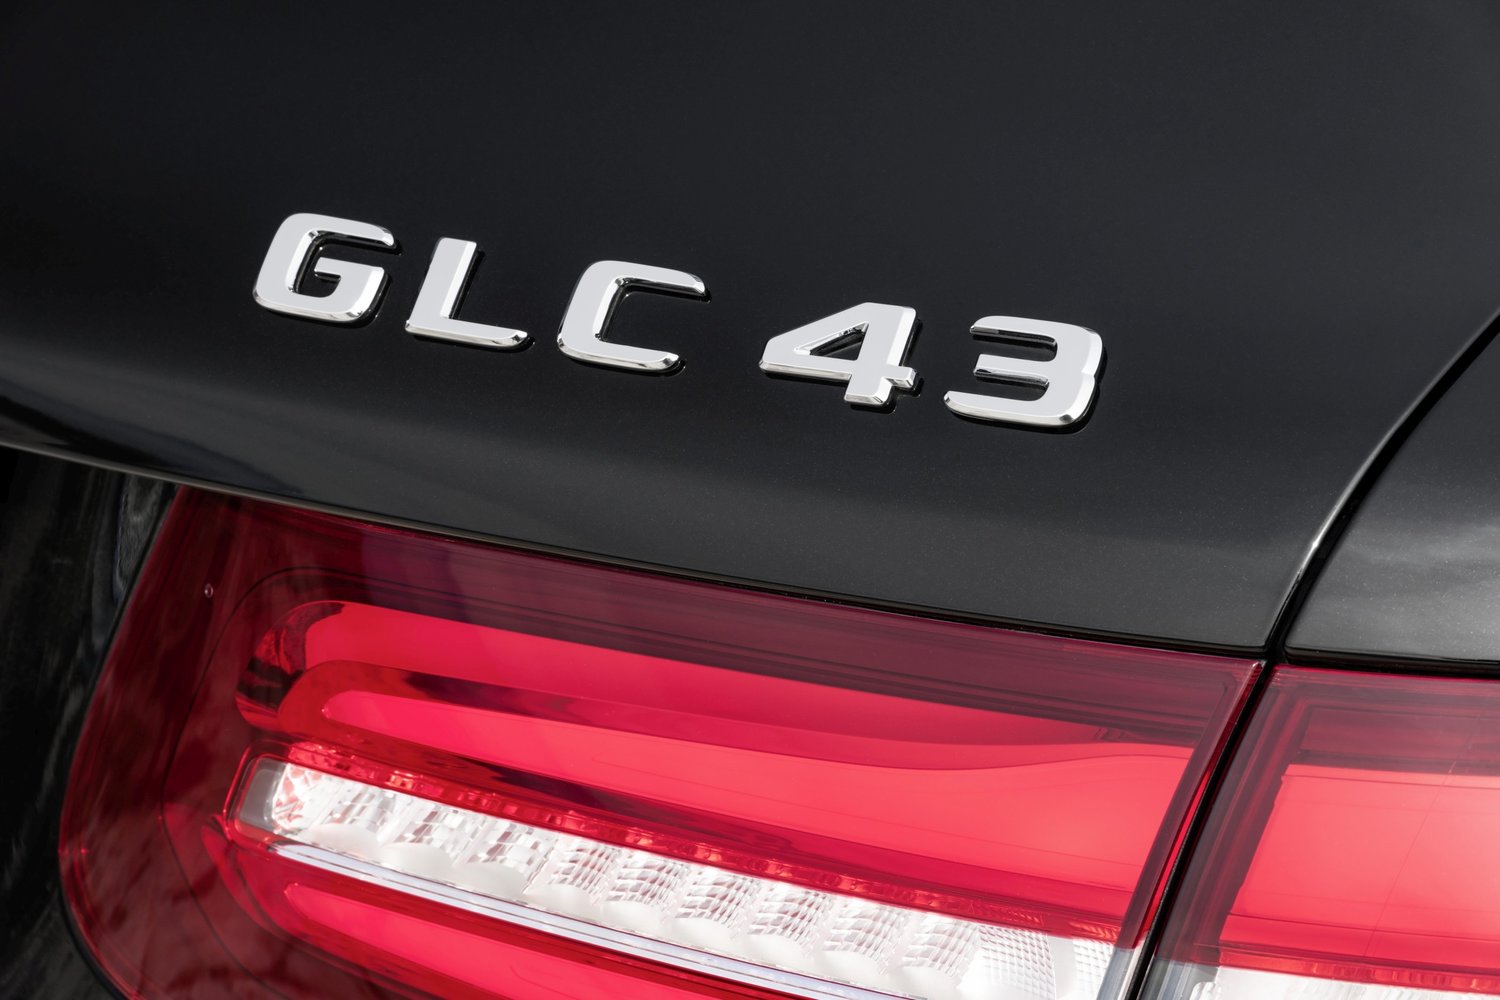 кроссовер Mercedes-Benz AMG GLC 2016г выпуска модификация 3.0 AT (367 л.с.) 4×4